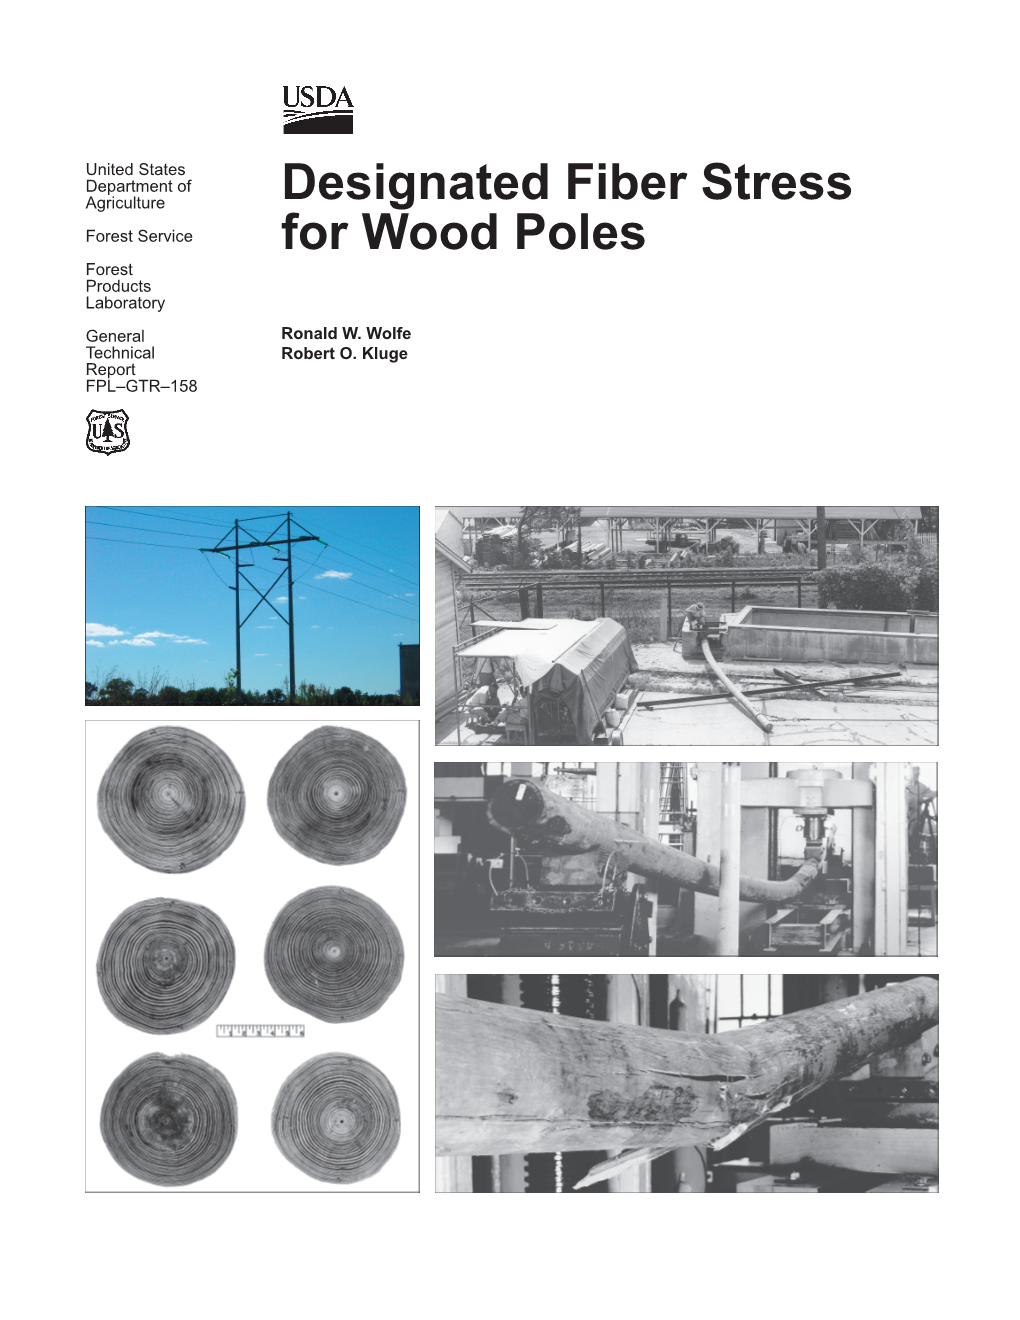 Designated Fiber Stress for Wood Poles